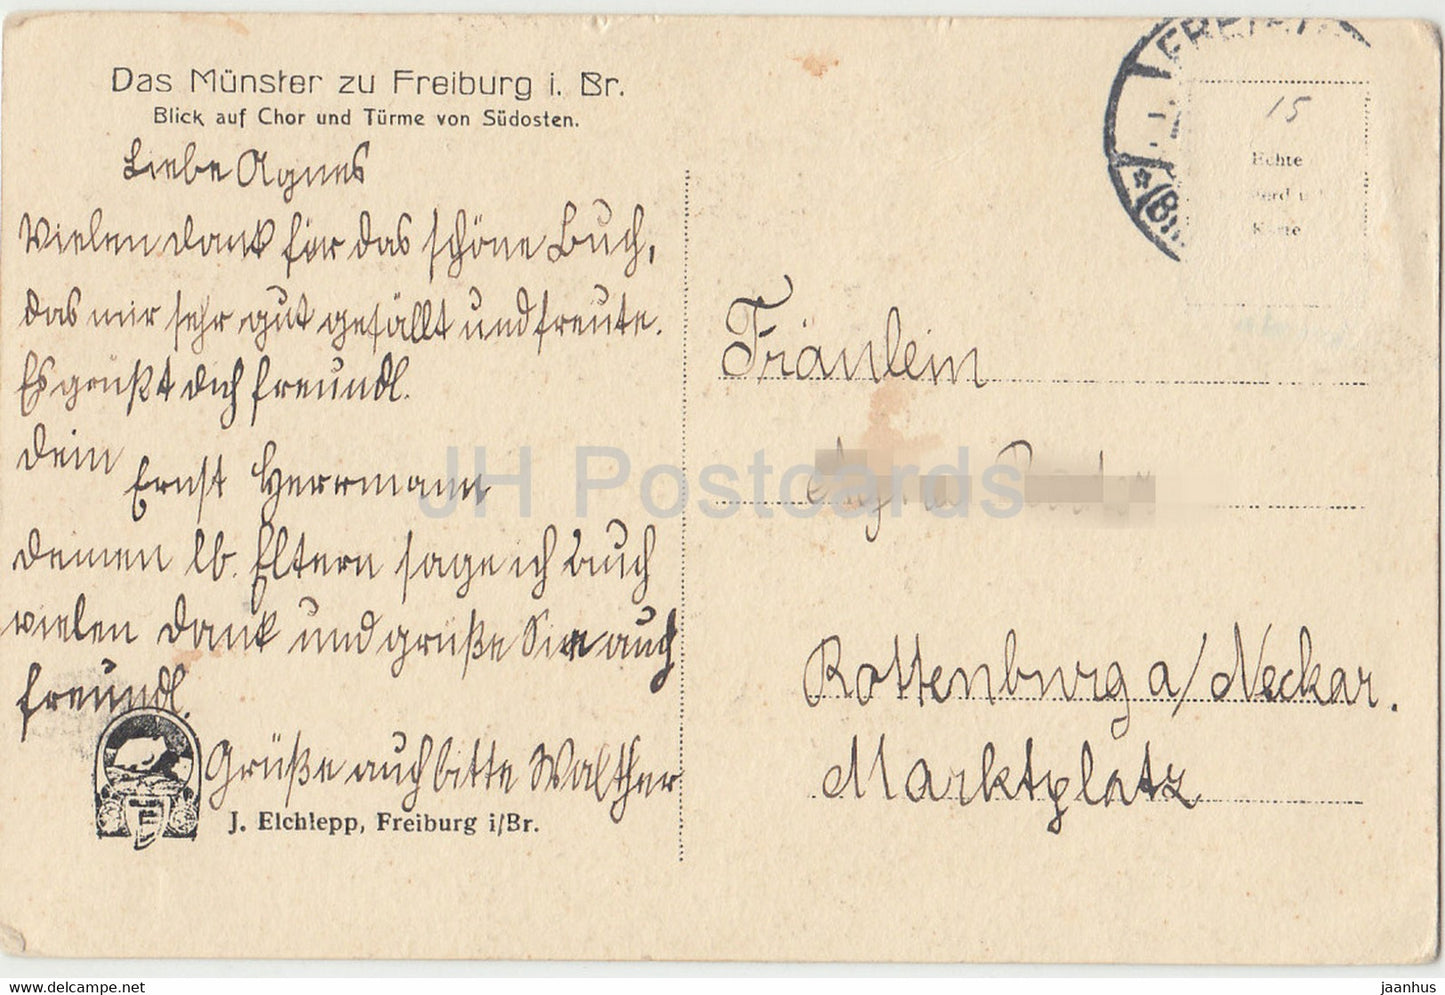 Das Munster zu Freiburg i Br - cathedral - old postcard - Germany - unused